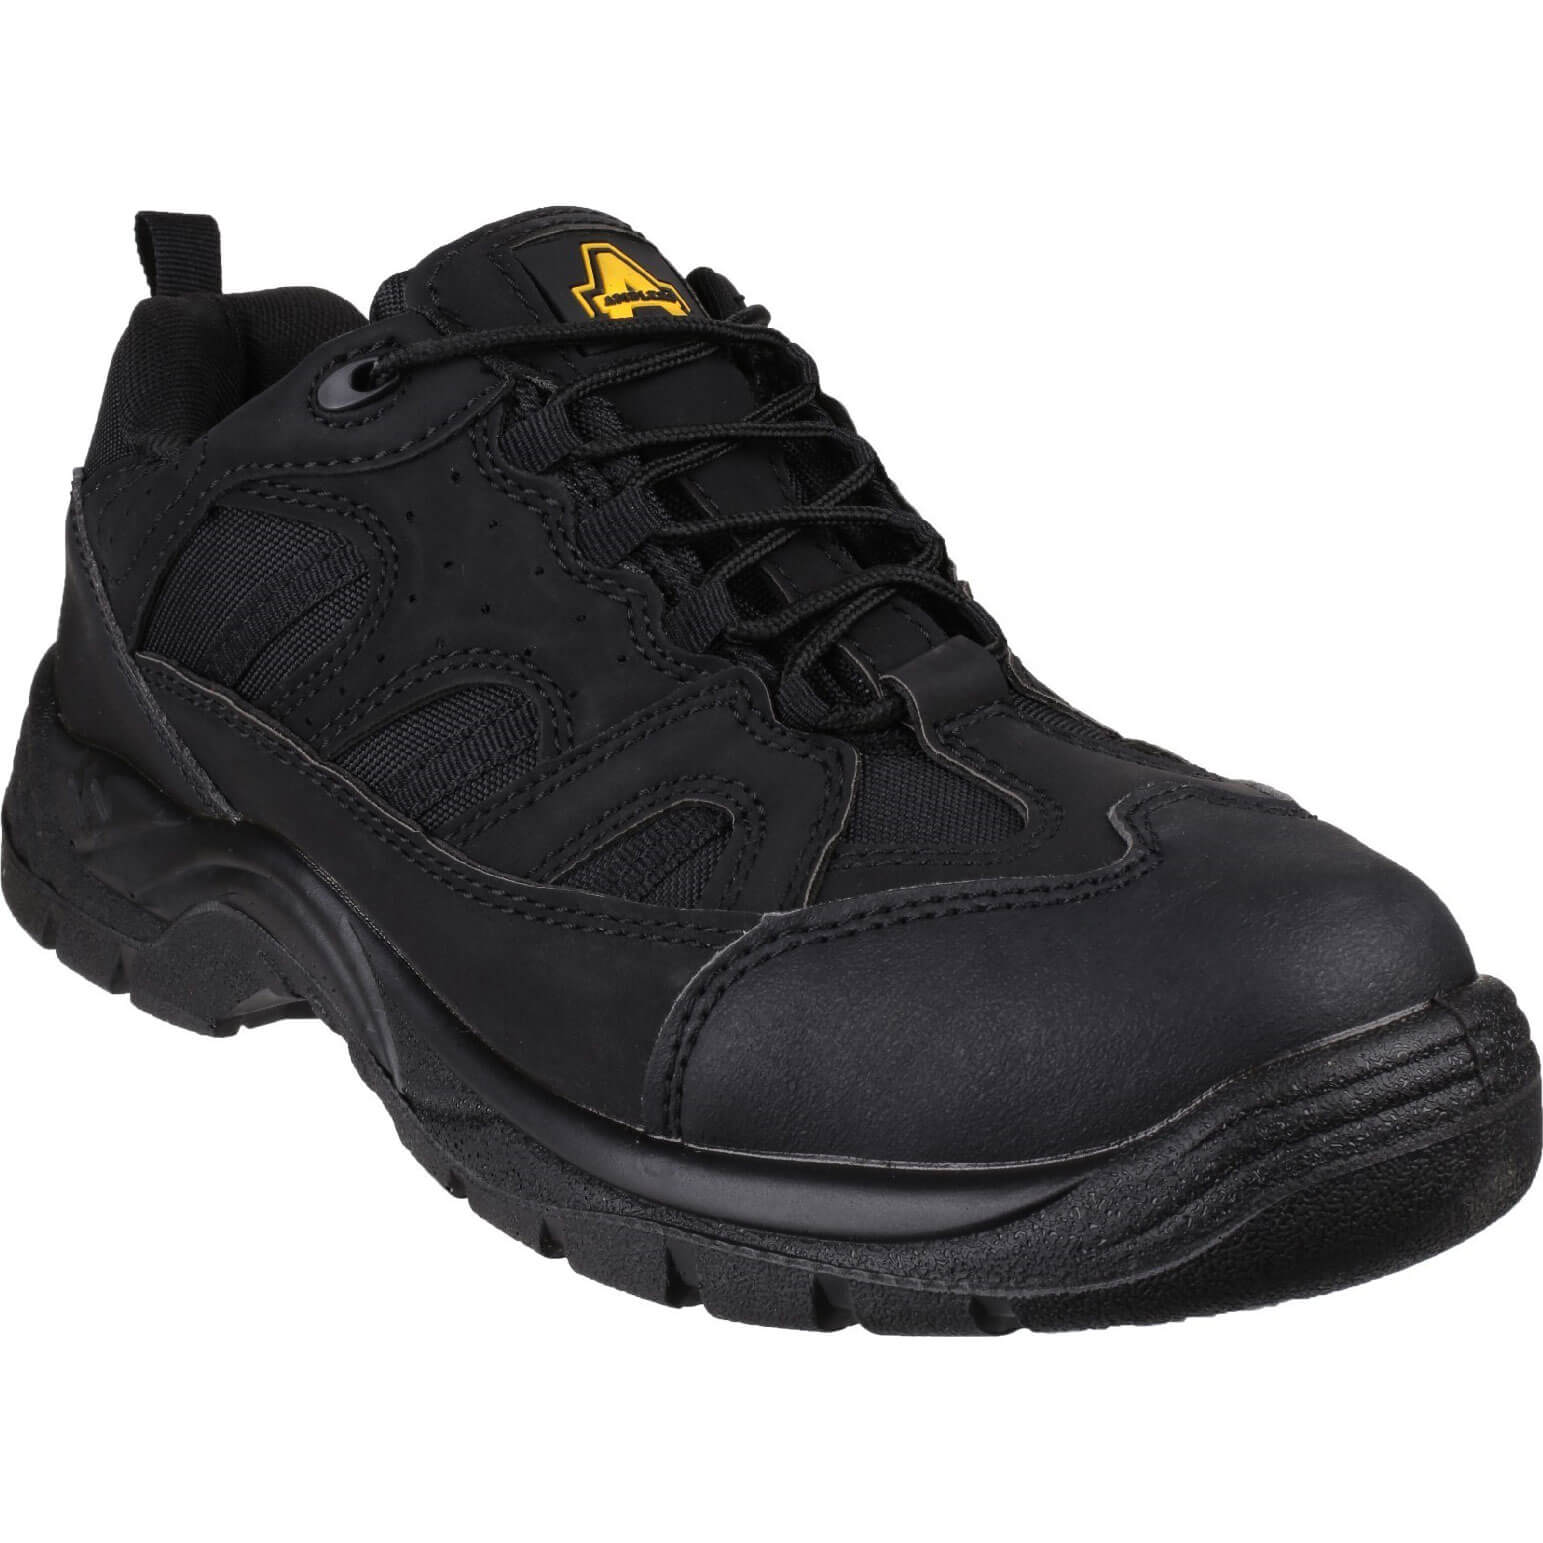 Image of Amblers Safety FS214 Vegan Friendly Safety Shoes Black Size 10